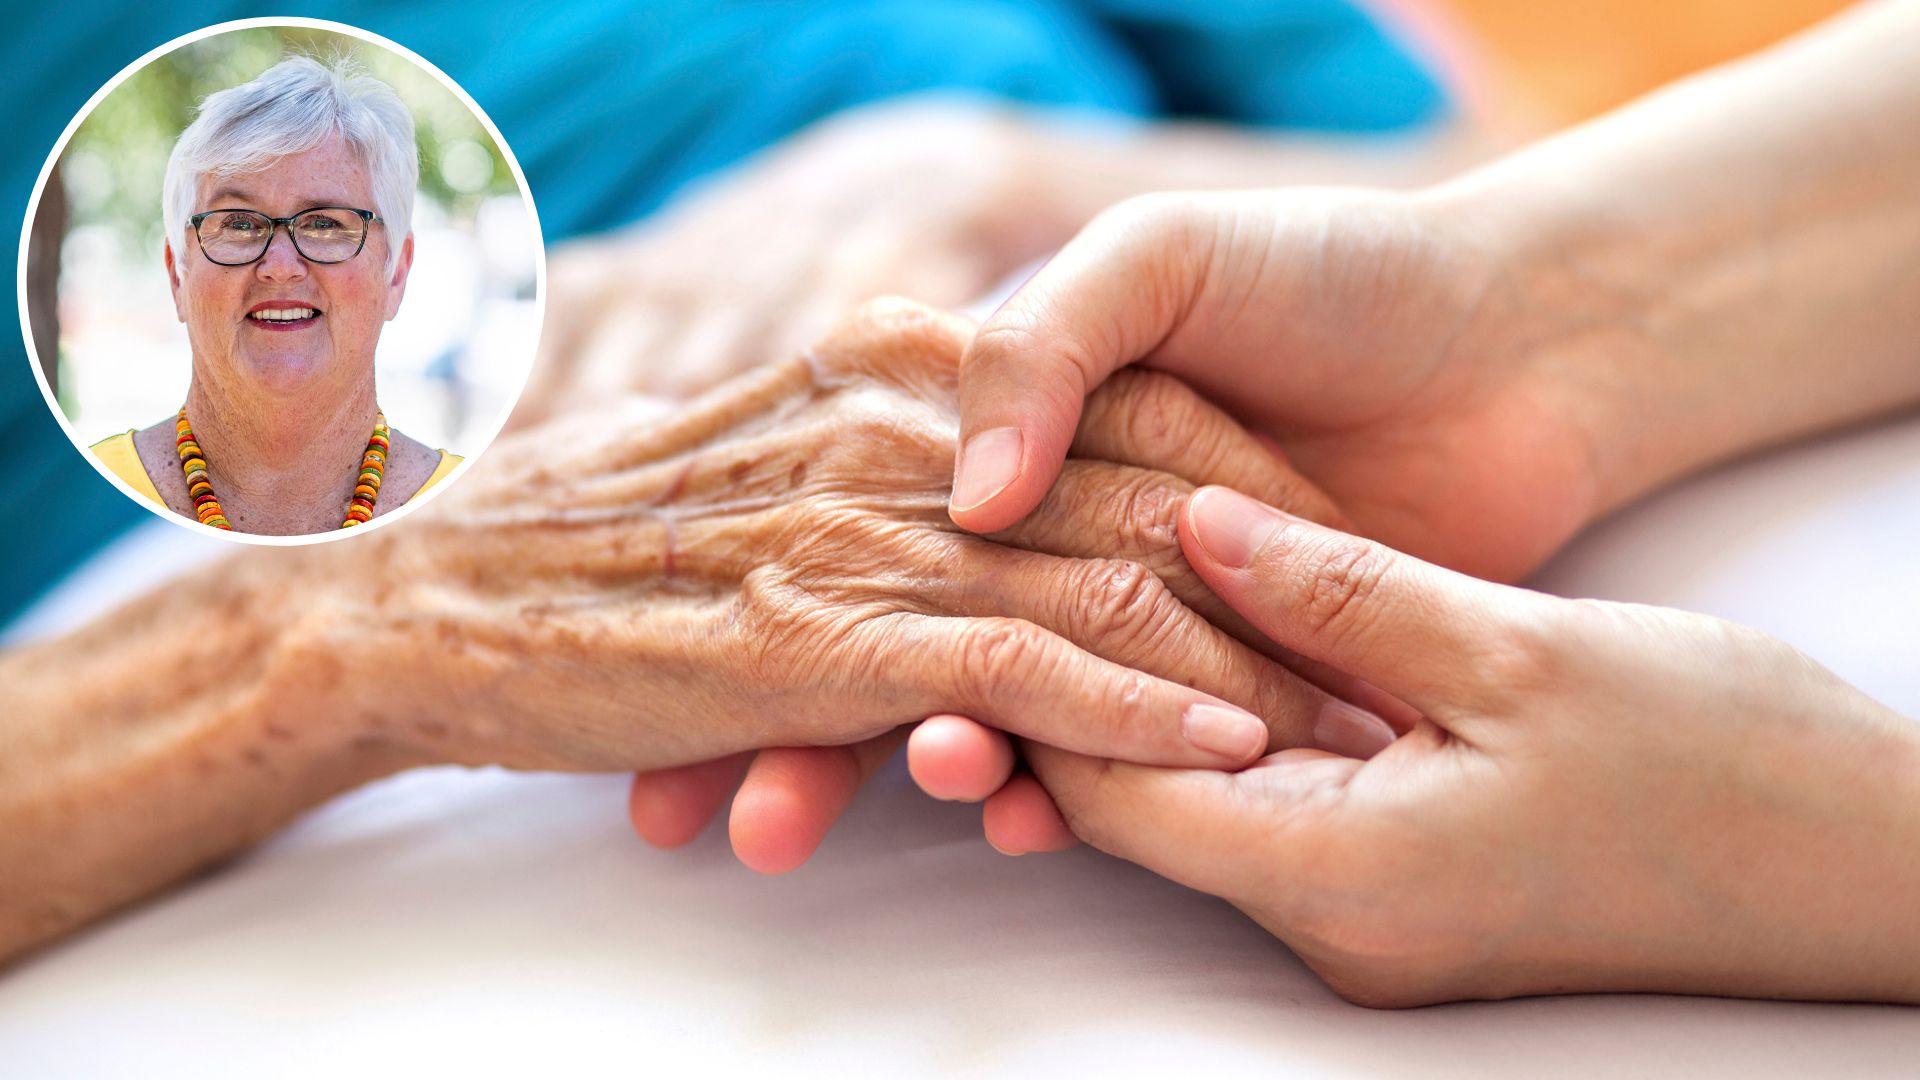 Registered nurses in aged care: how will Australia address the staffing shortfall?